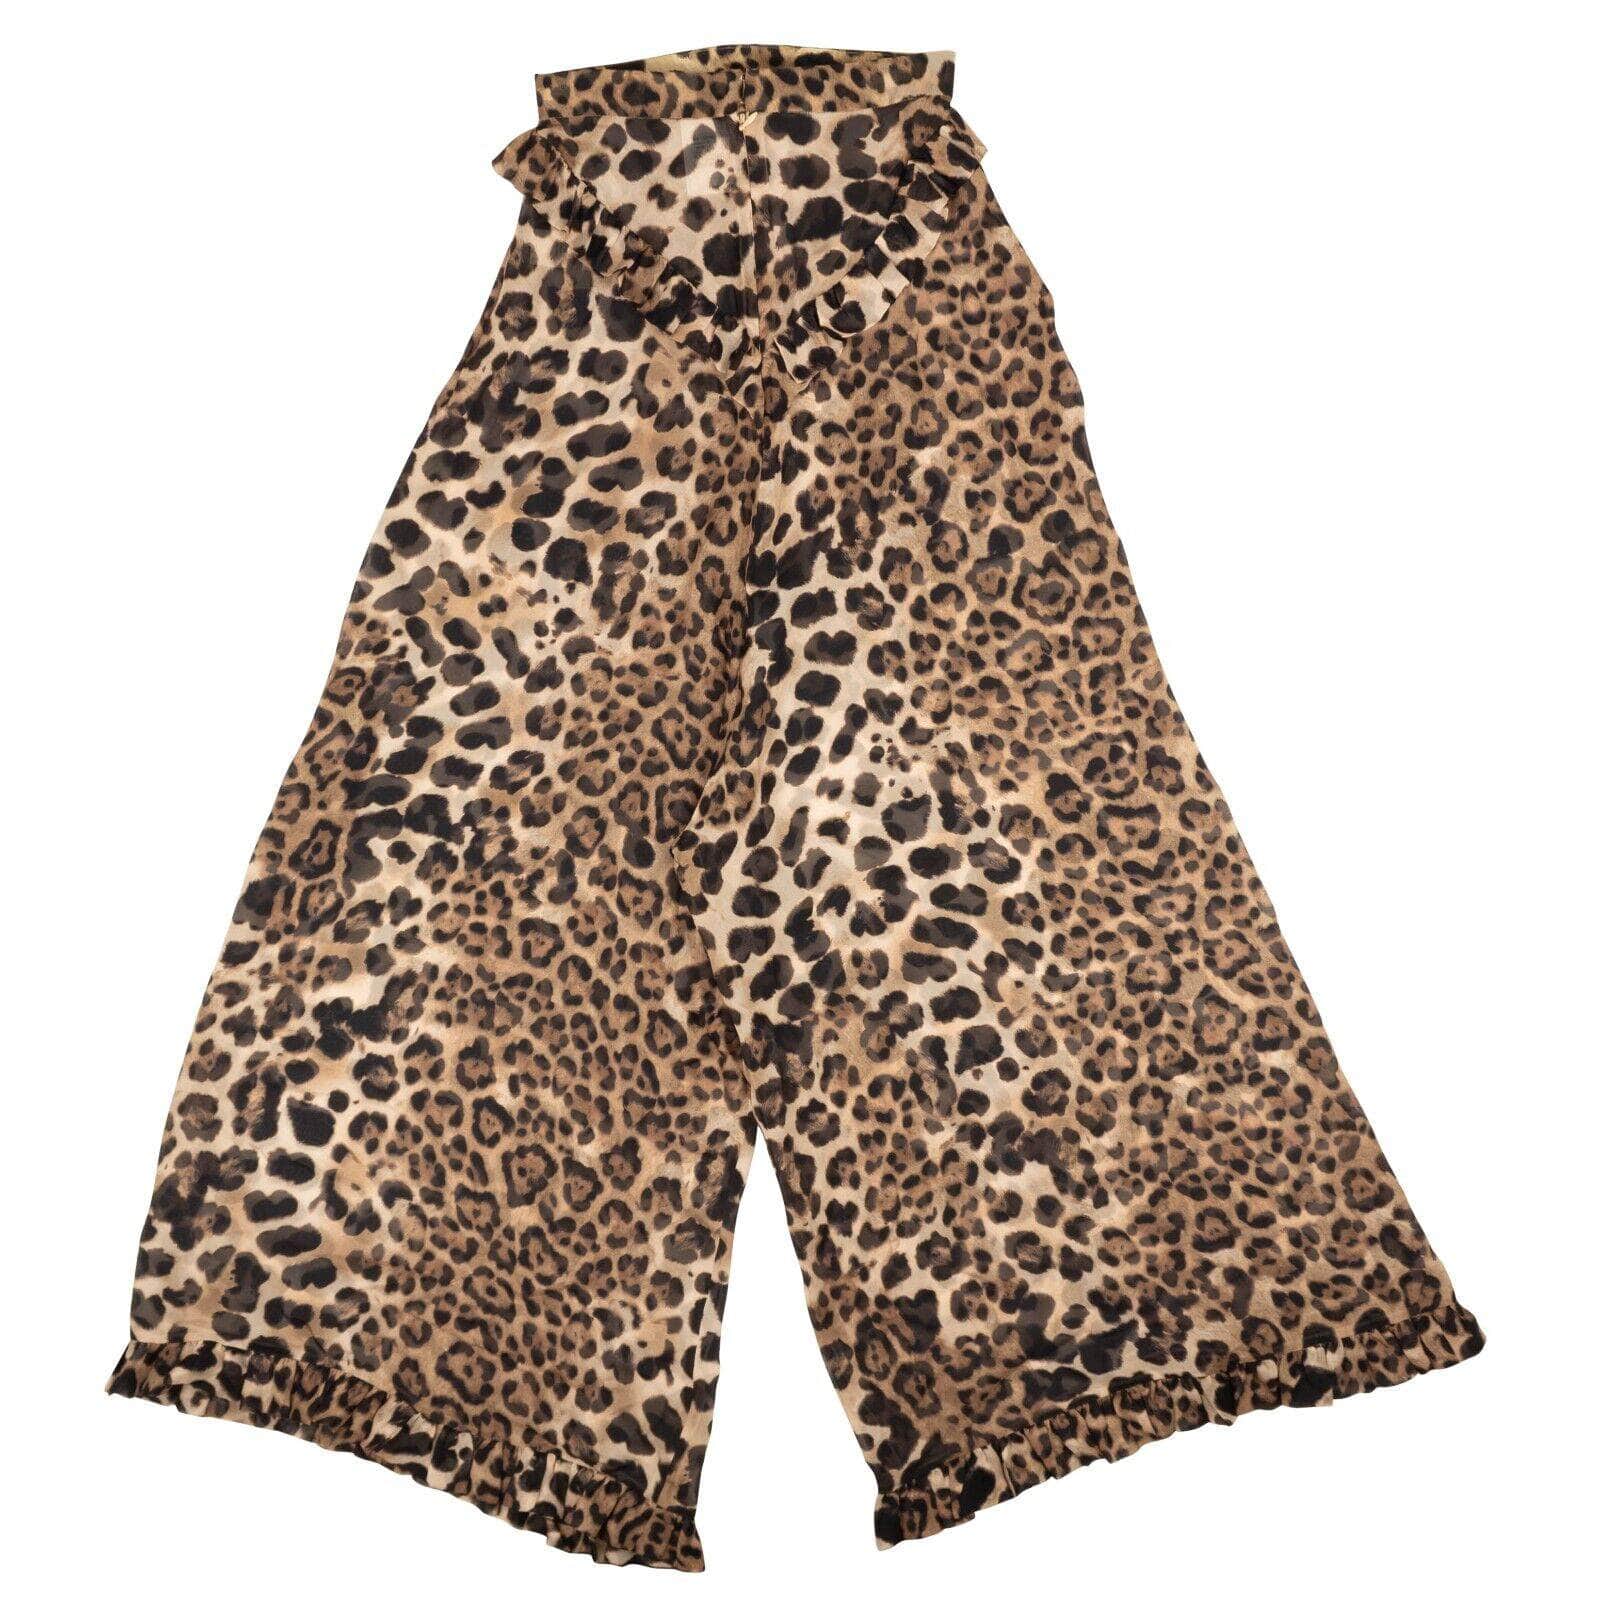 Leopard Print Wide Leg Pants - Medium